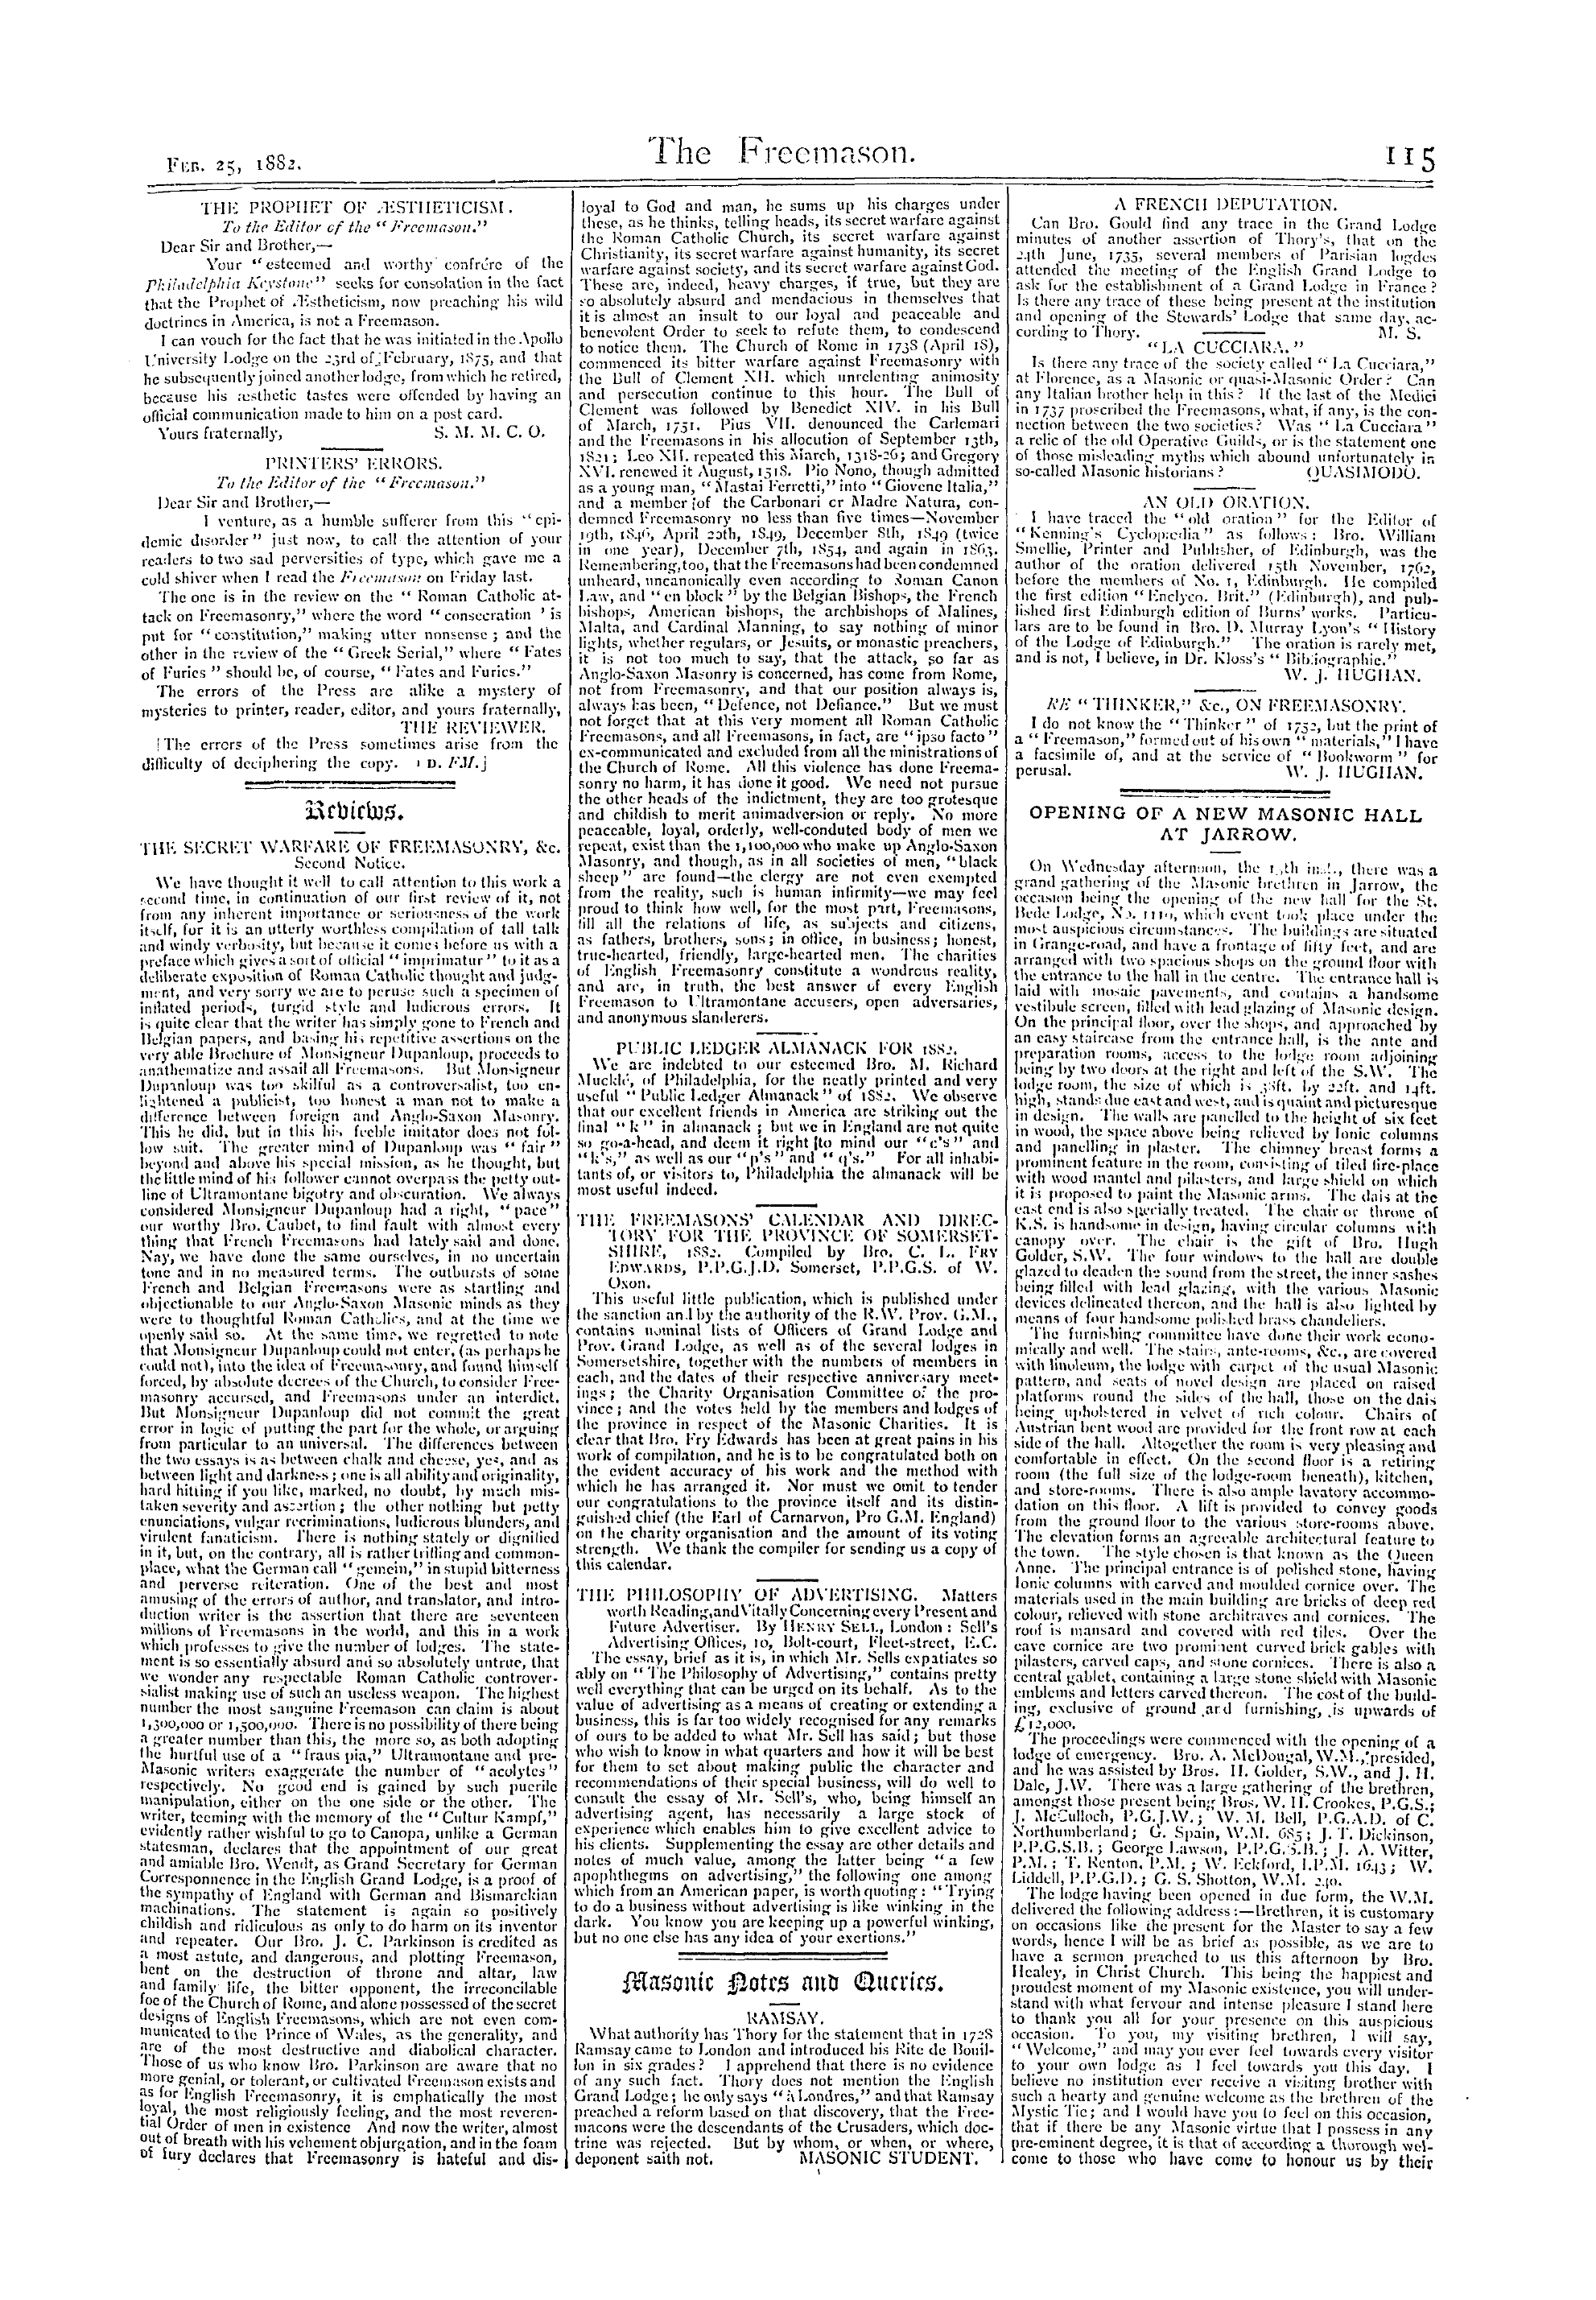 The Freemason: 1882-02-25 - Reviews.